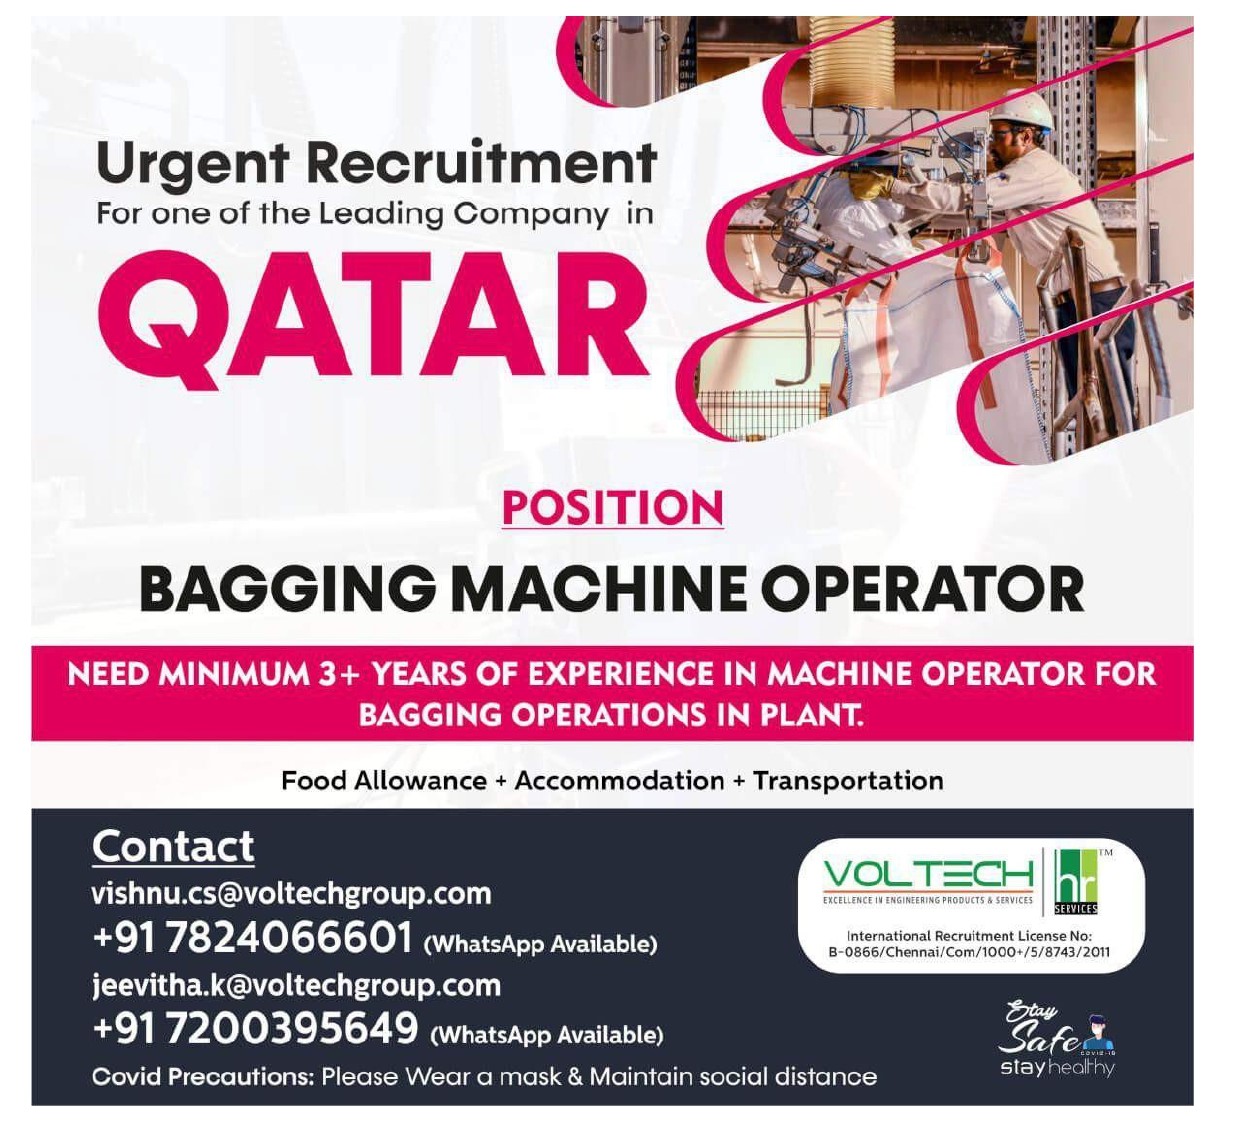 Urgent Requirement for Qatar